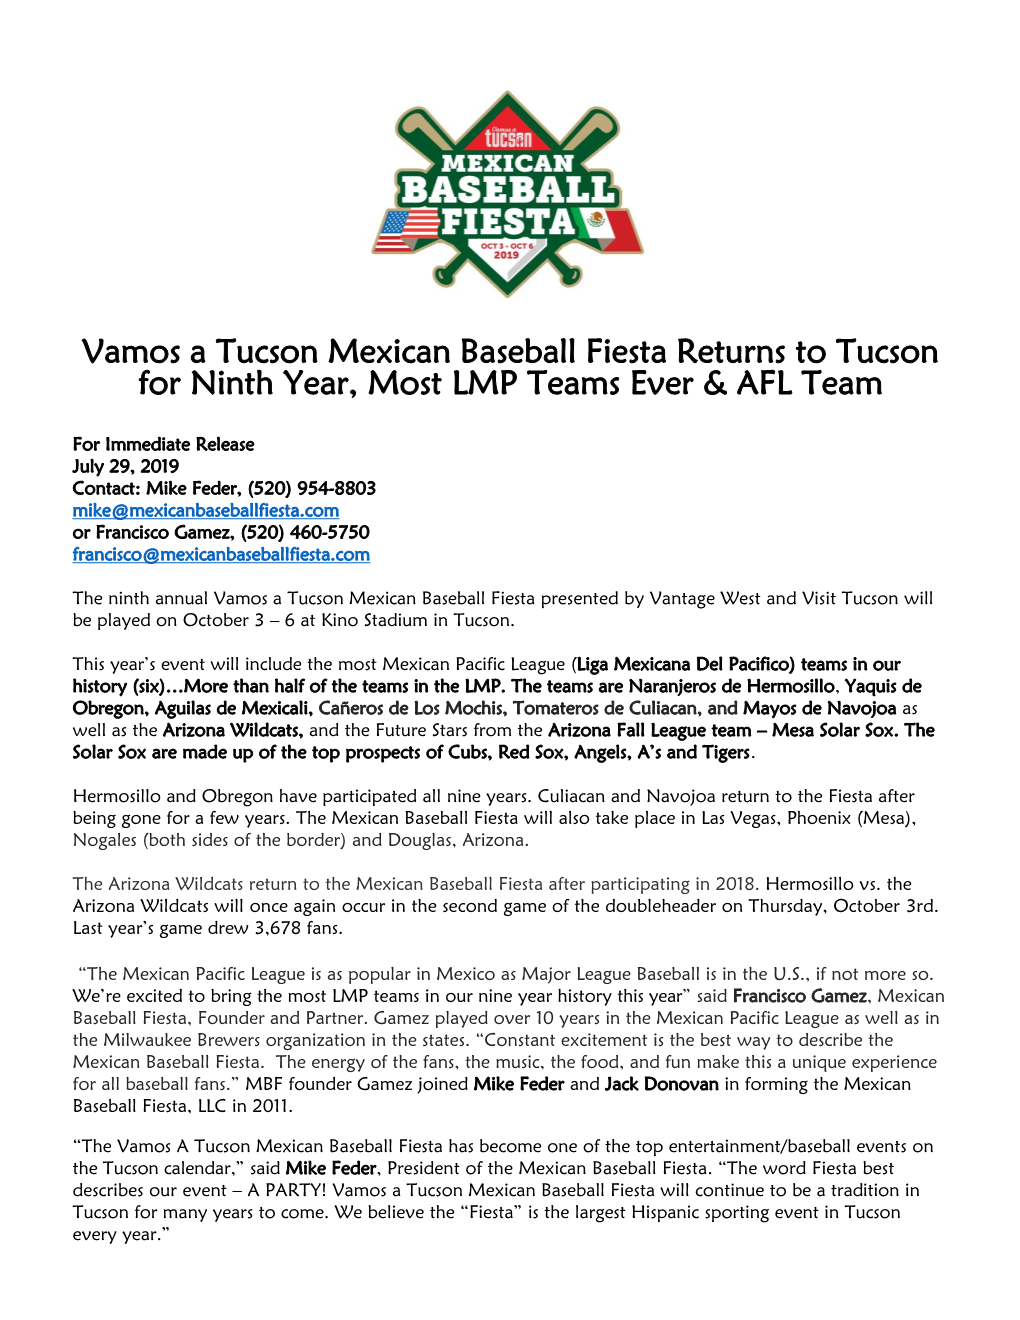 Vamos a Tucson Mexican Baseball Fiesta Returns to Tucson for Ninth Year, Most LMP Teams Ever & AFL Team